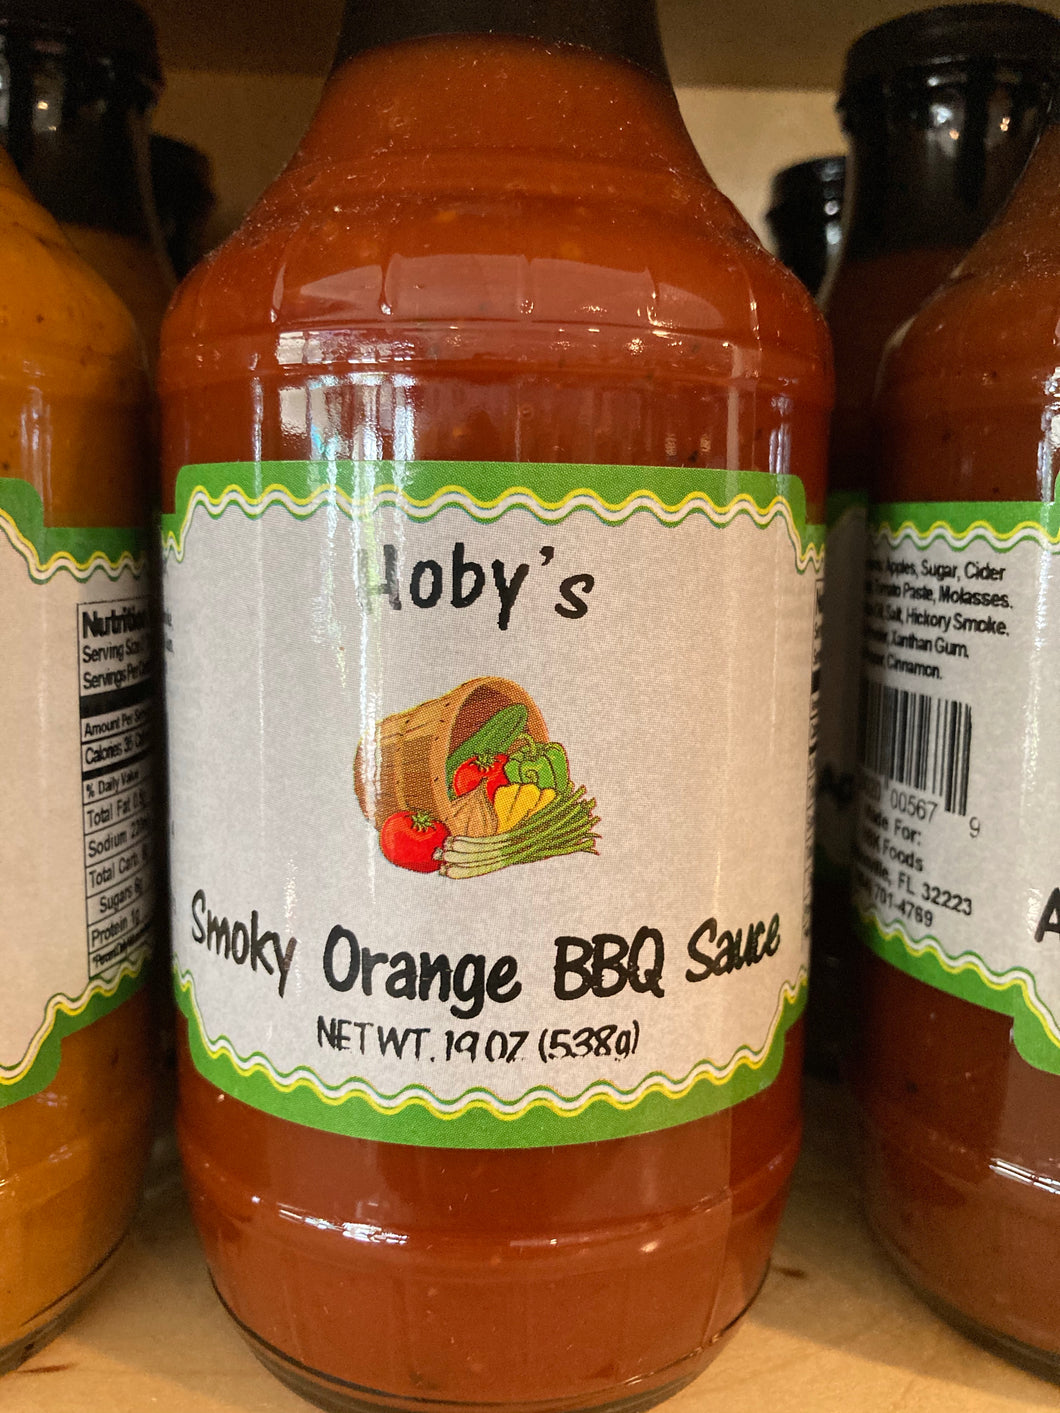 Smoky Orange BBQ Sauce from Hoby’s